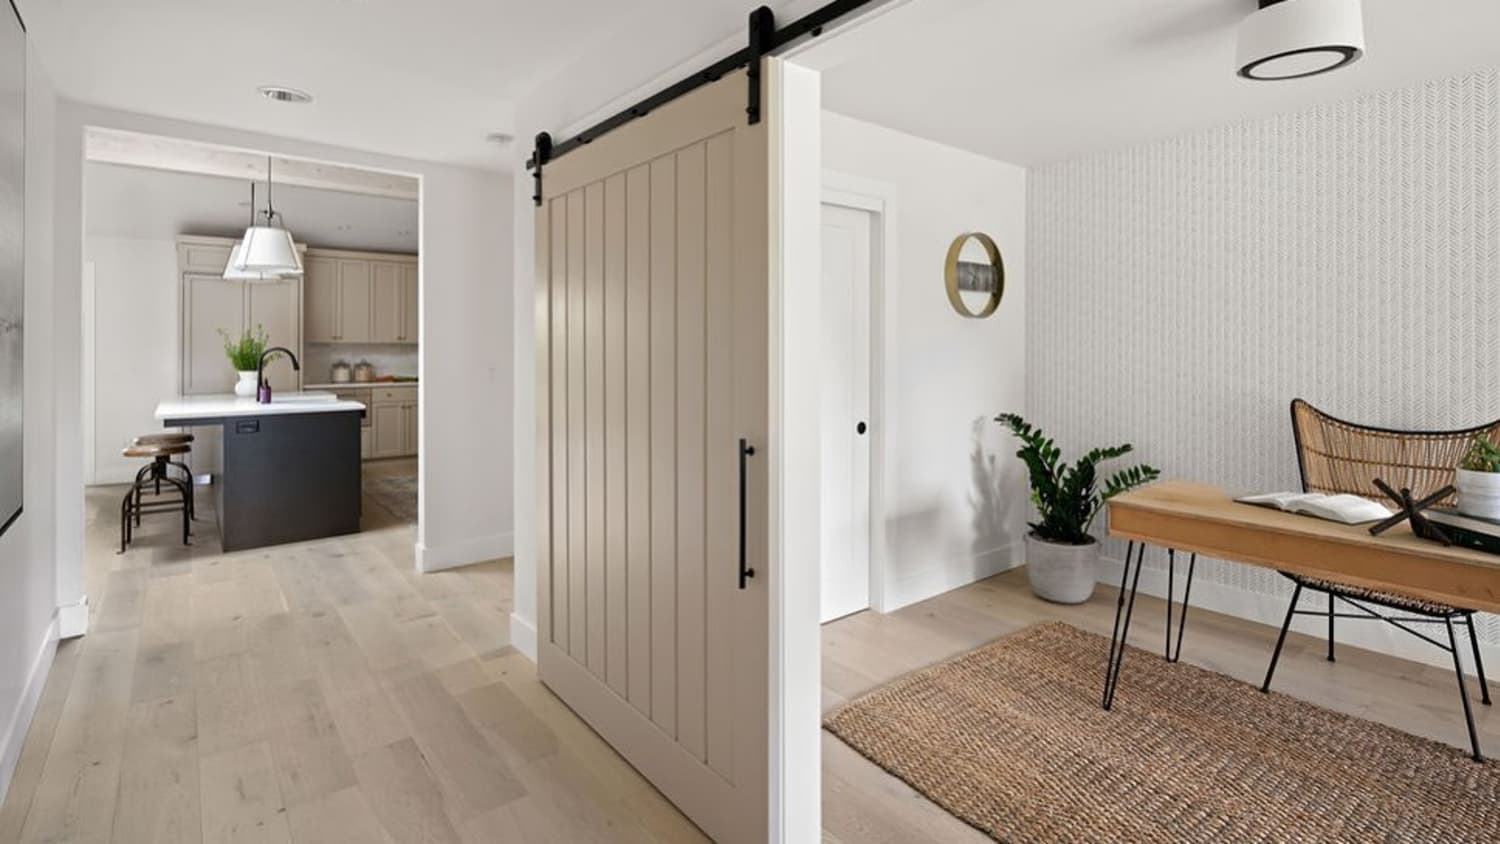 20 Door Alternatives for a Cozier Space